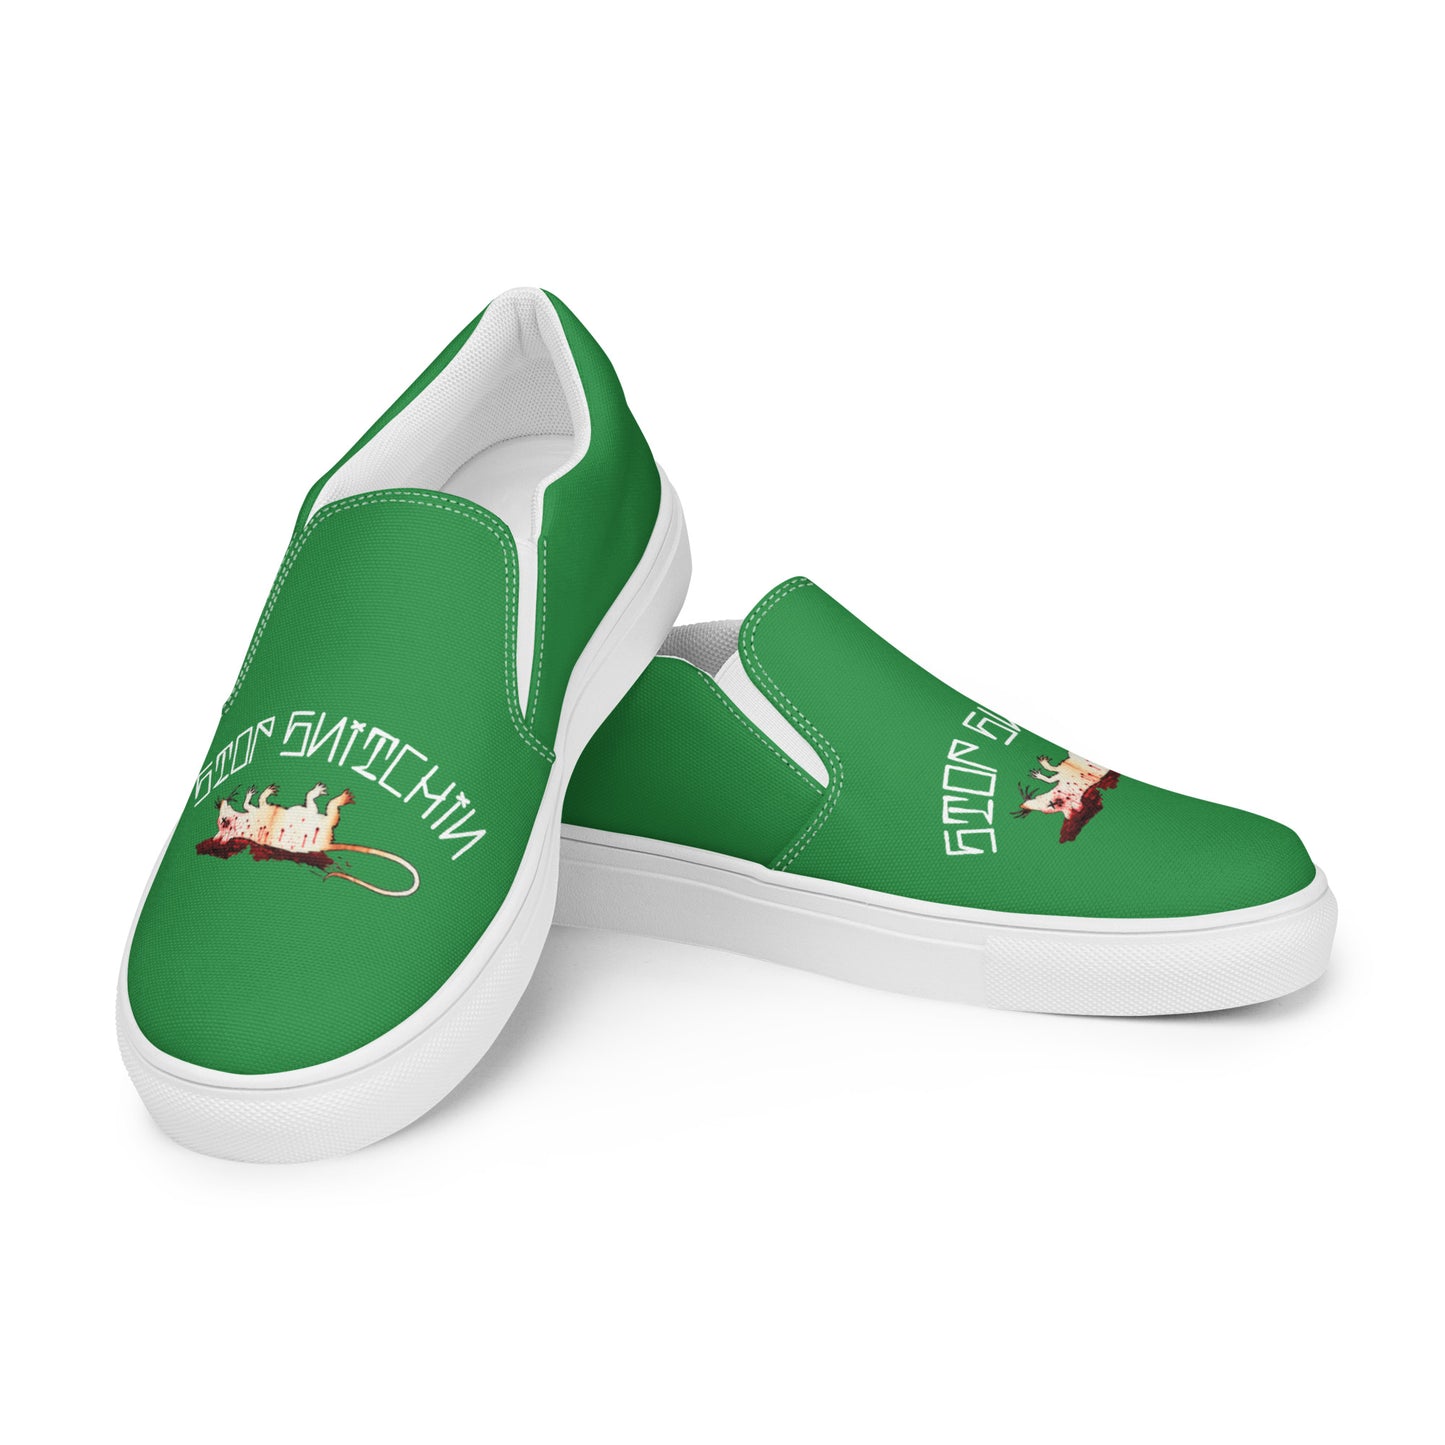 Women’s Fink Green slip-on canvas shoes